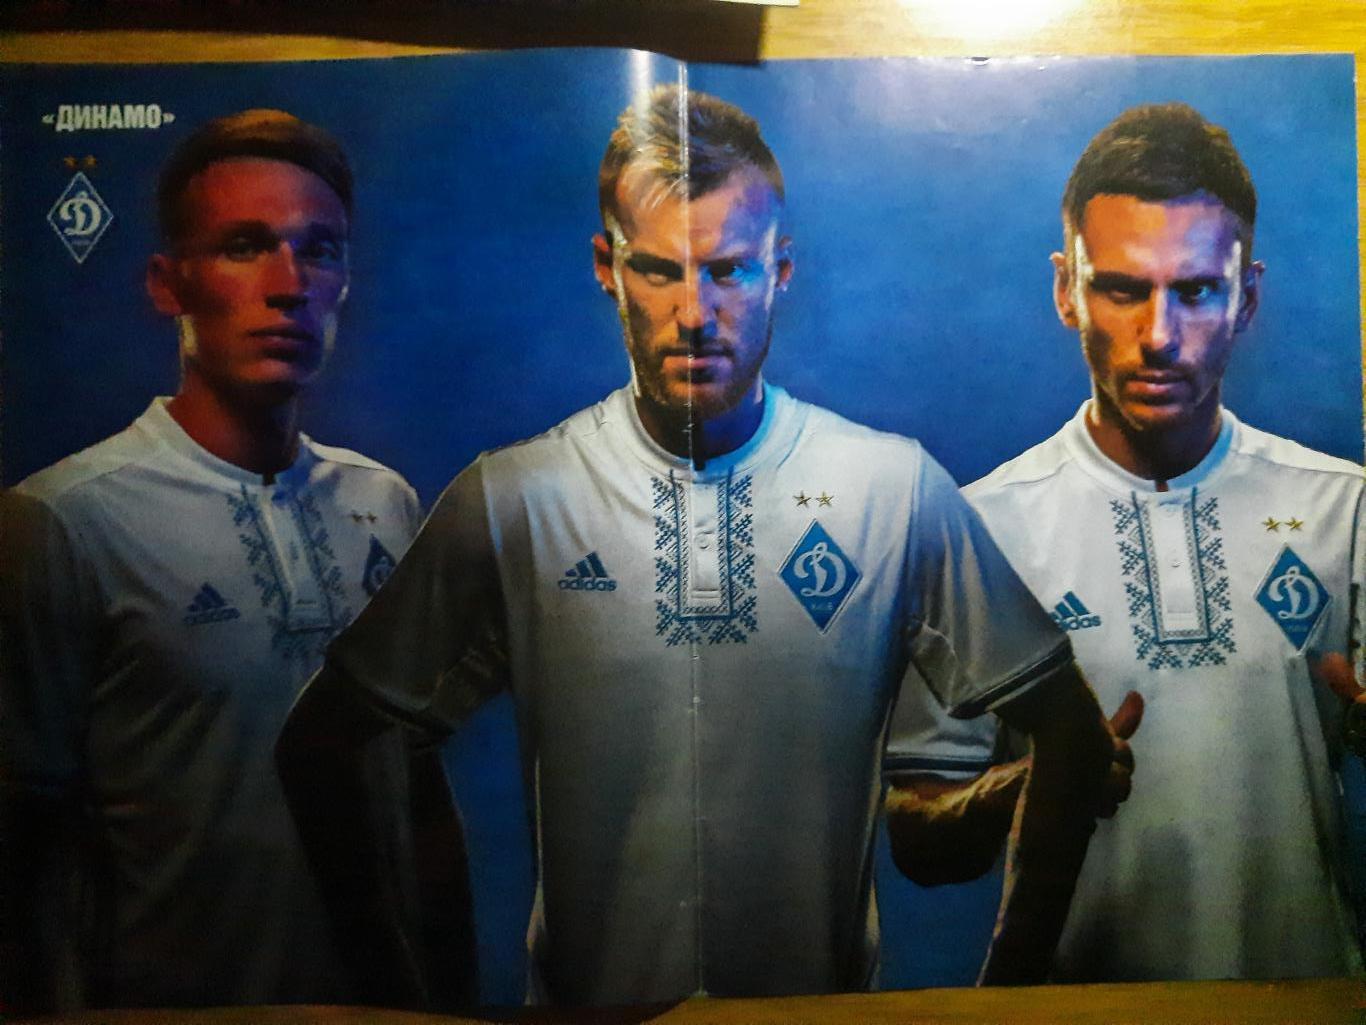 постер из еженедельника Футбол #61 2016, Динамо К.